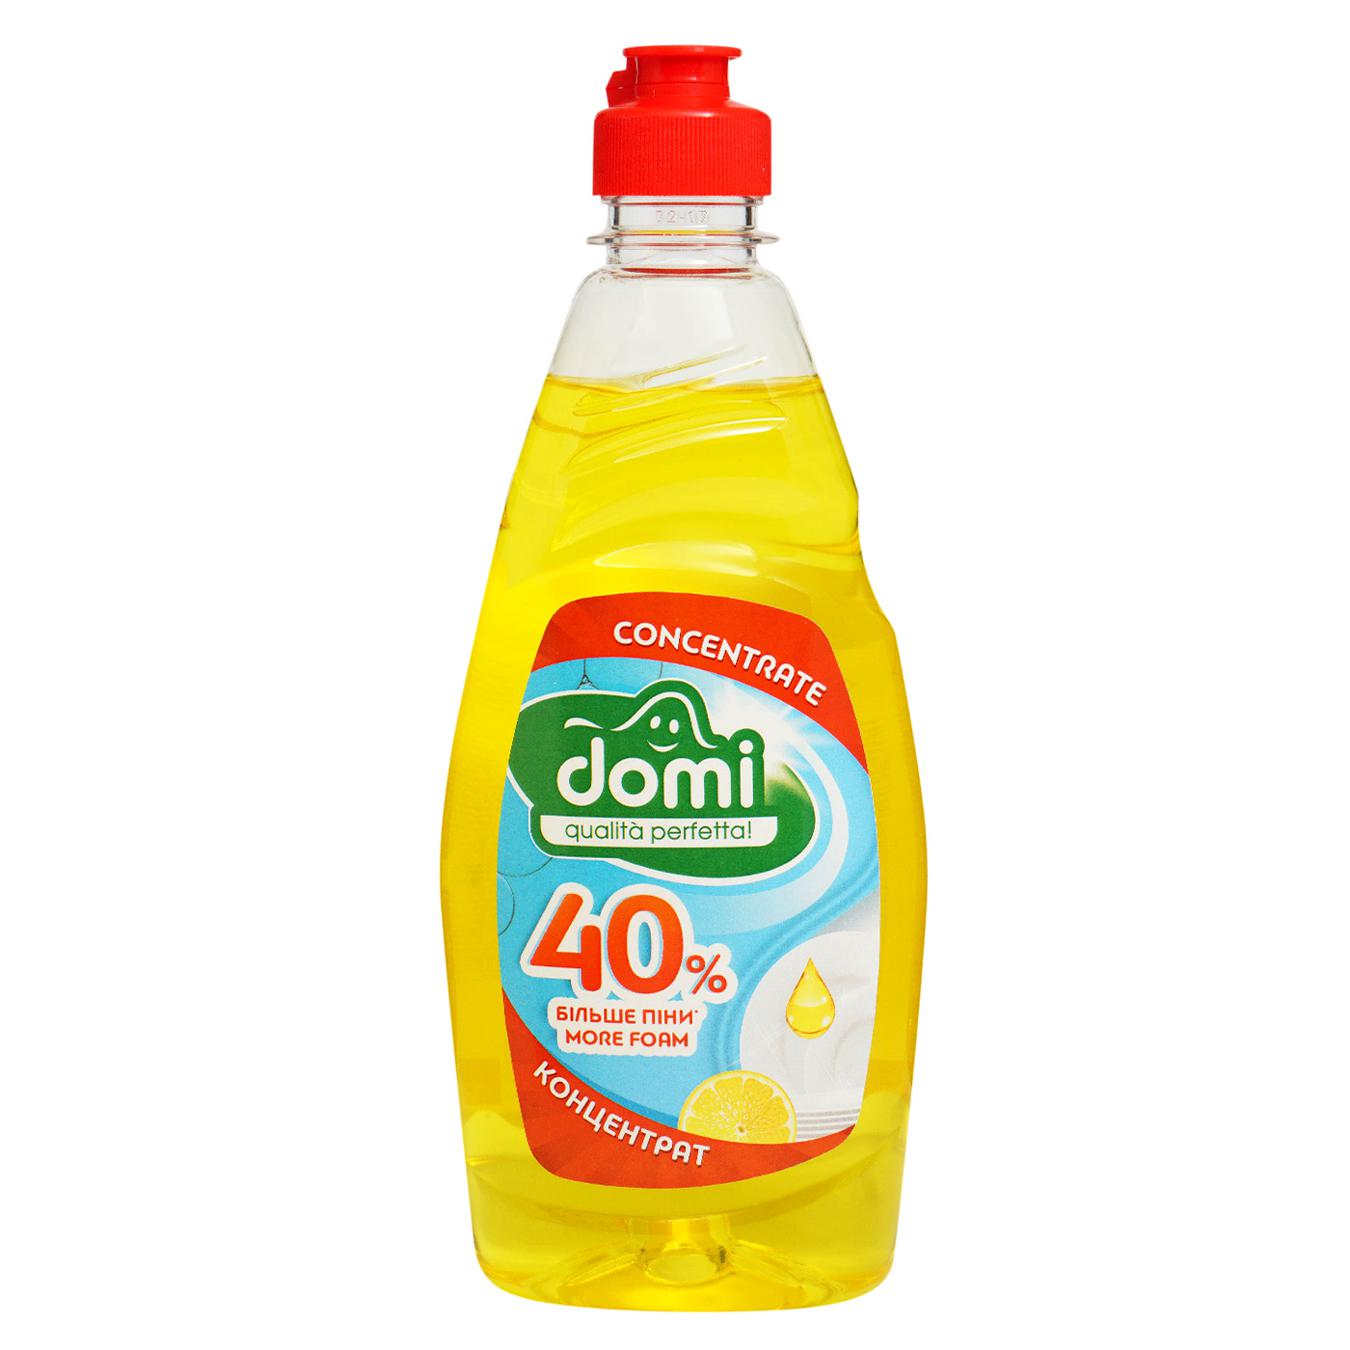 Domi dishwashing liquid concentrate Lemon 450 ml